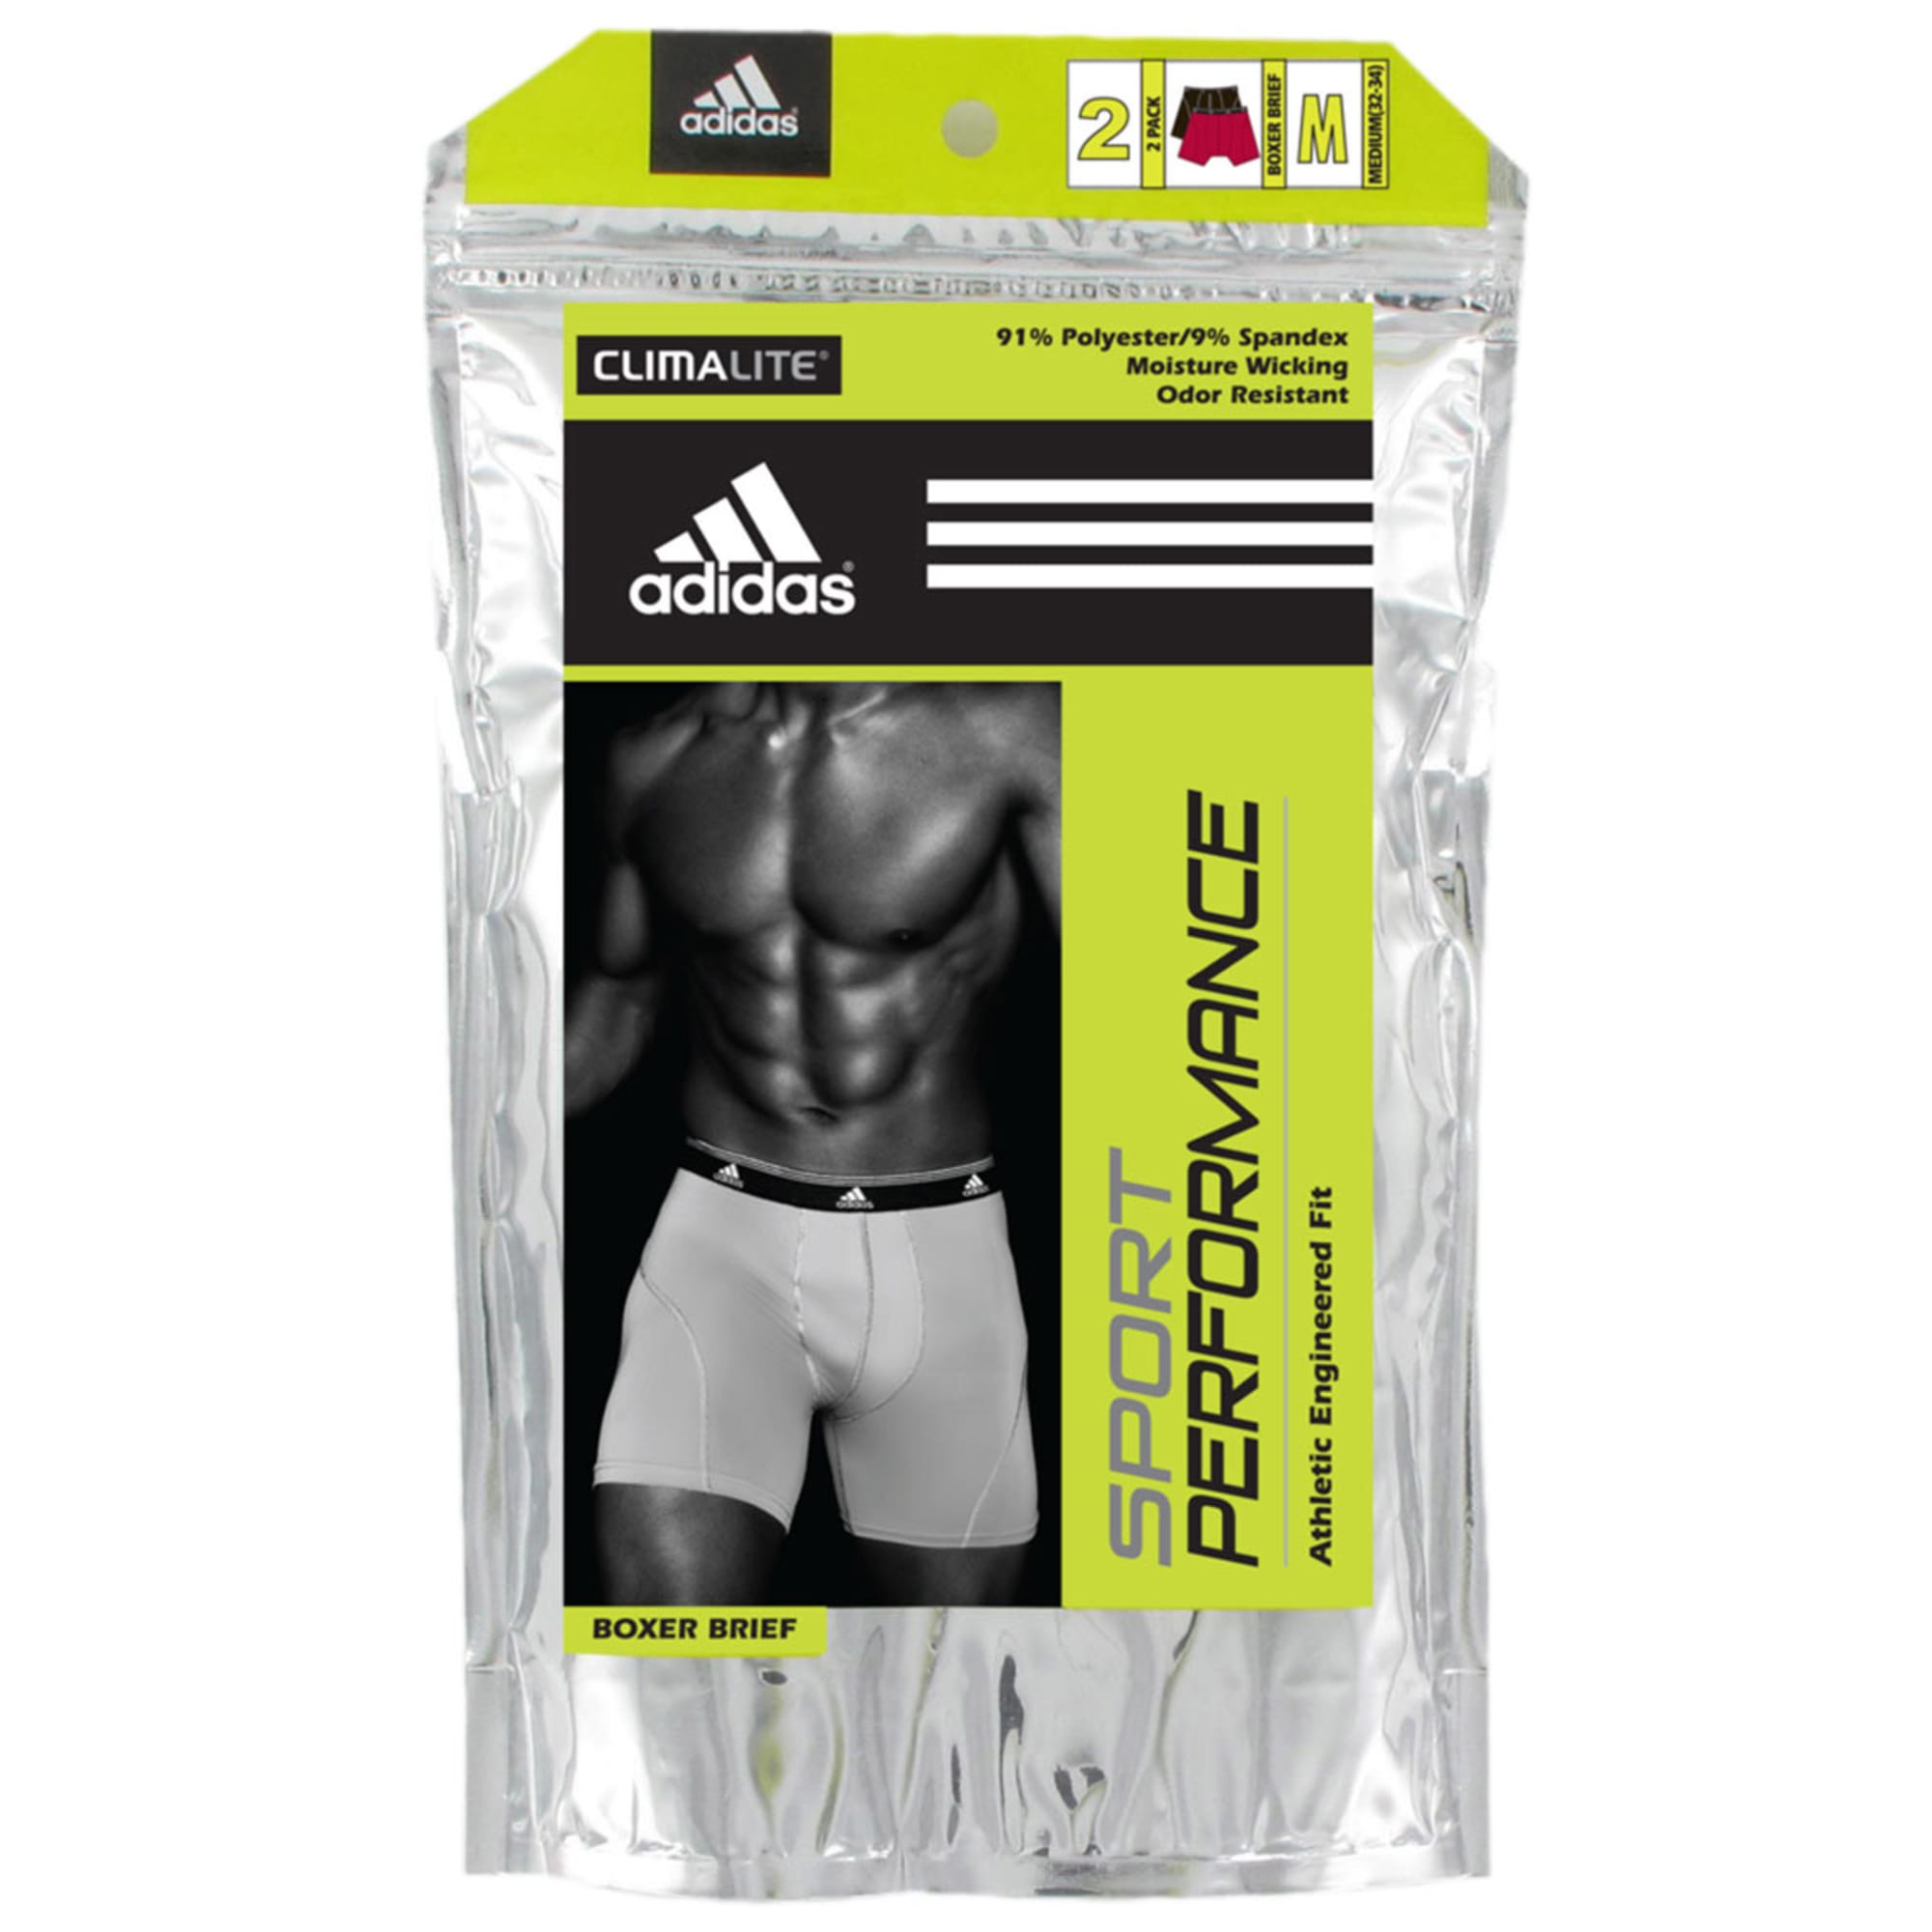 ADIDAS Men's Sport Performance Climalite Boxer Briefs, 2-Pack